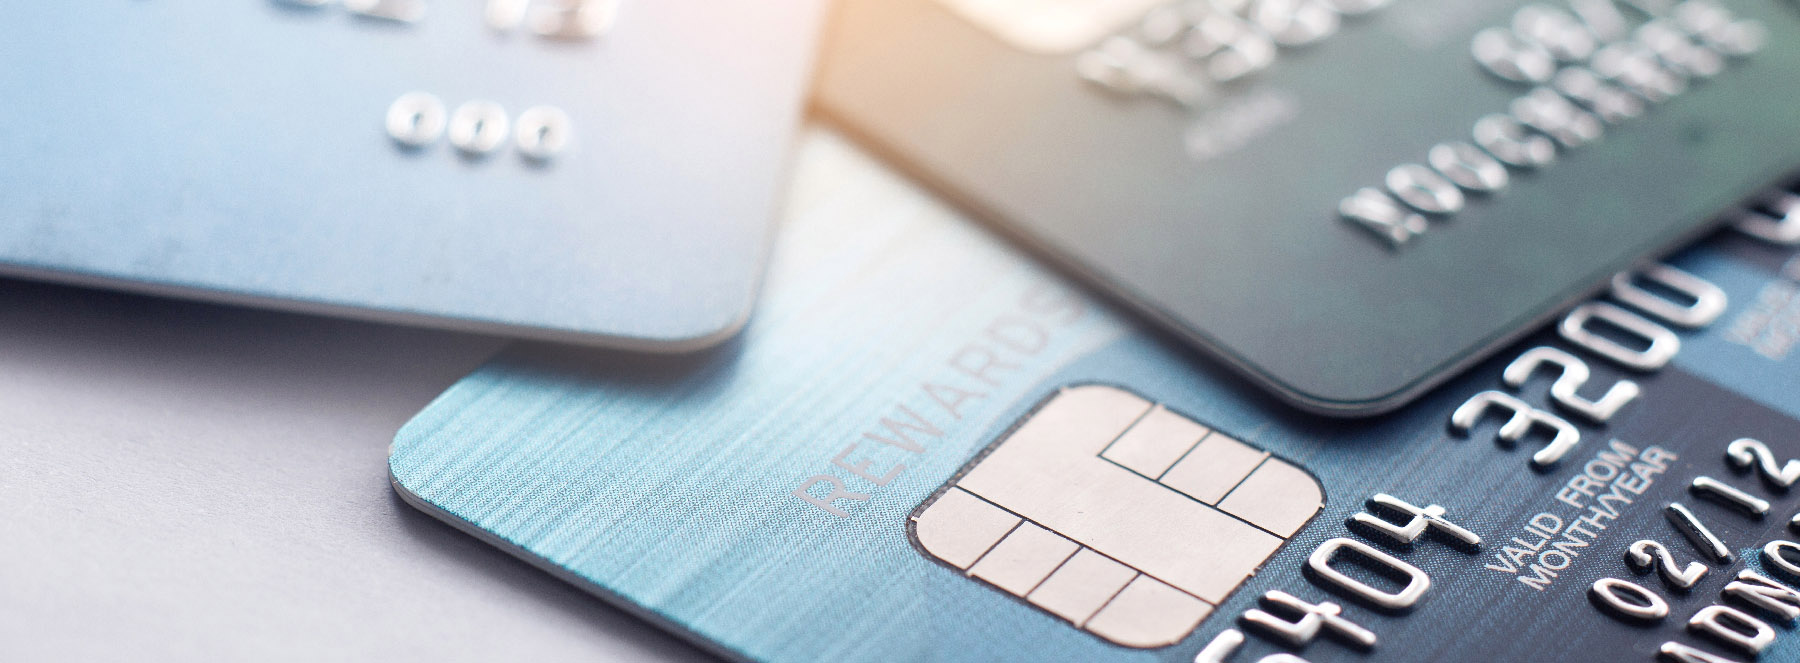 Debit Cards Header Image